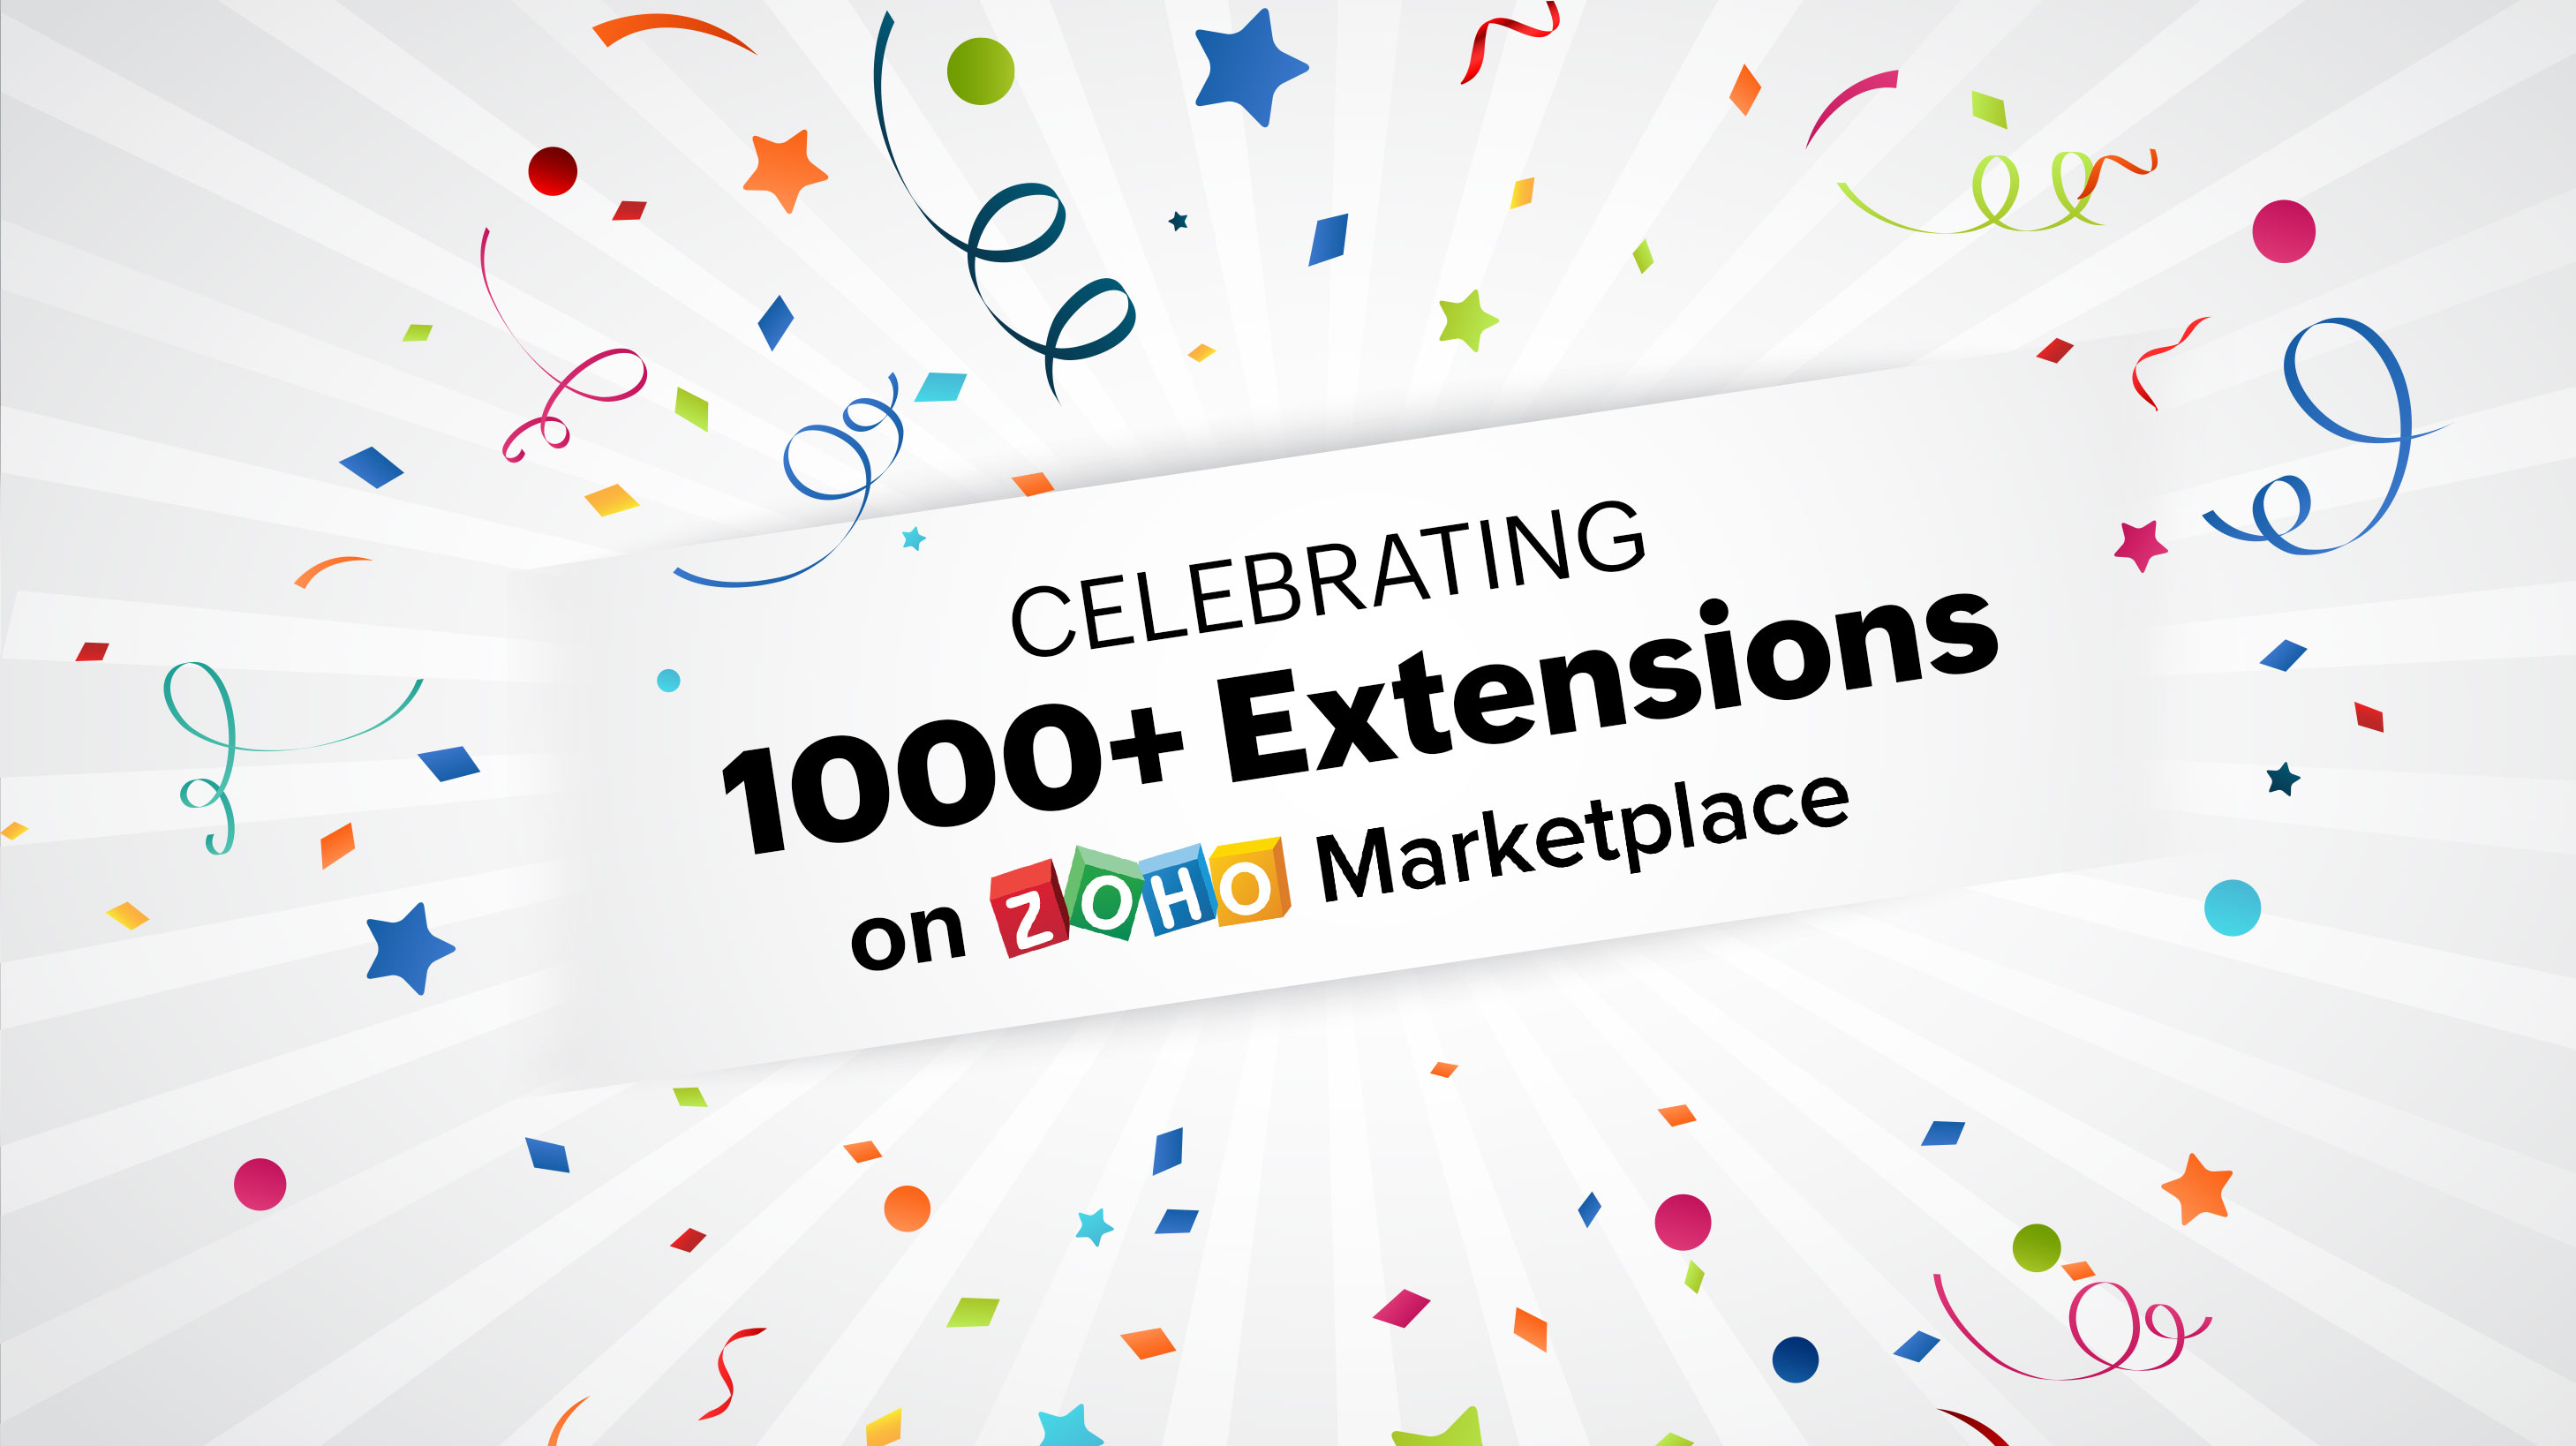 Celebrating 1000+ extensions on Zoho Marketplace